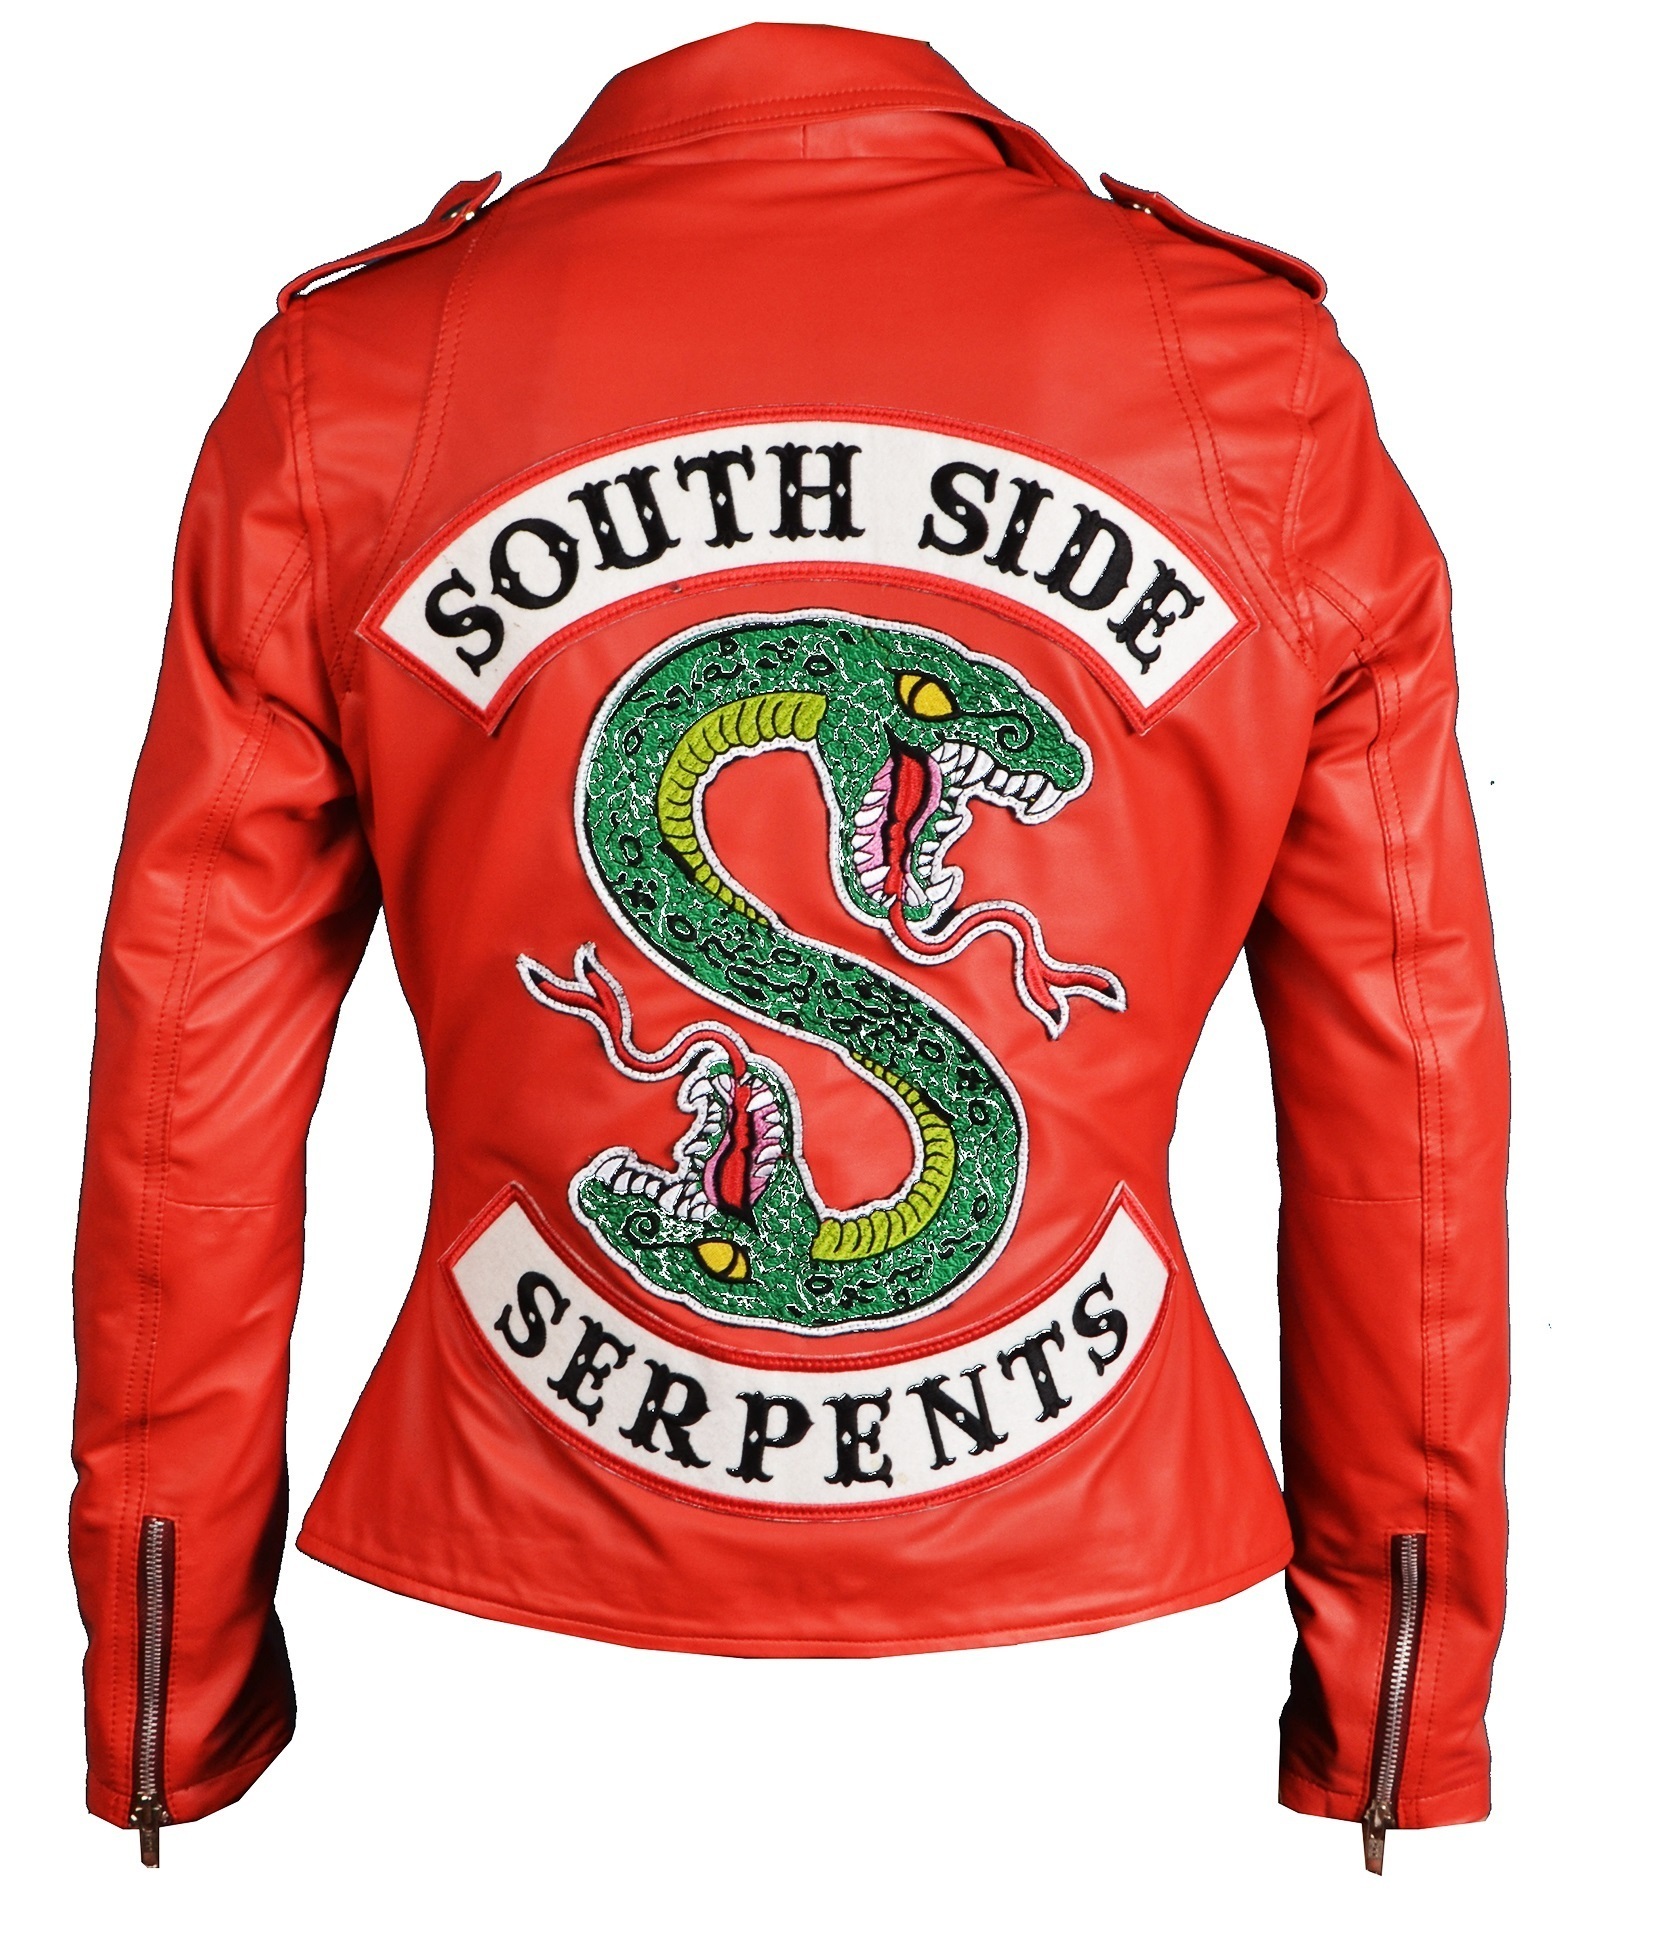 Southside Serpents Leather Jacket - Color Jackets